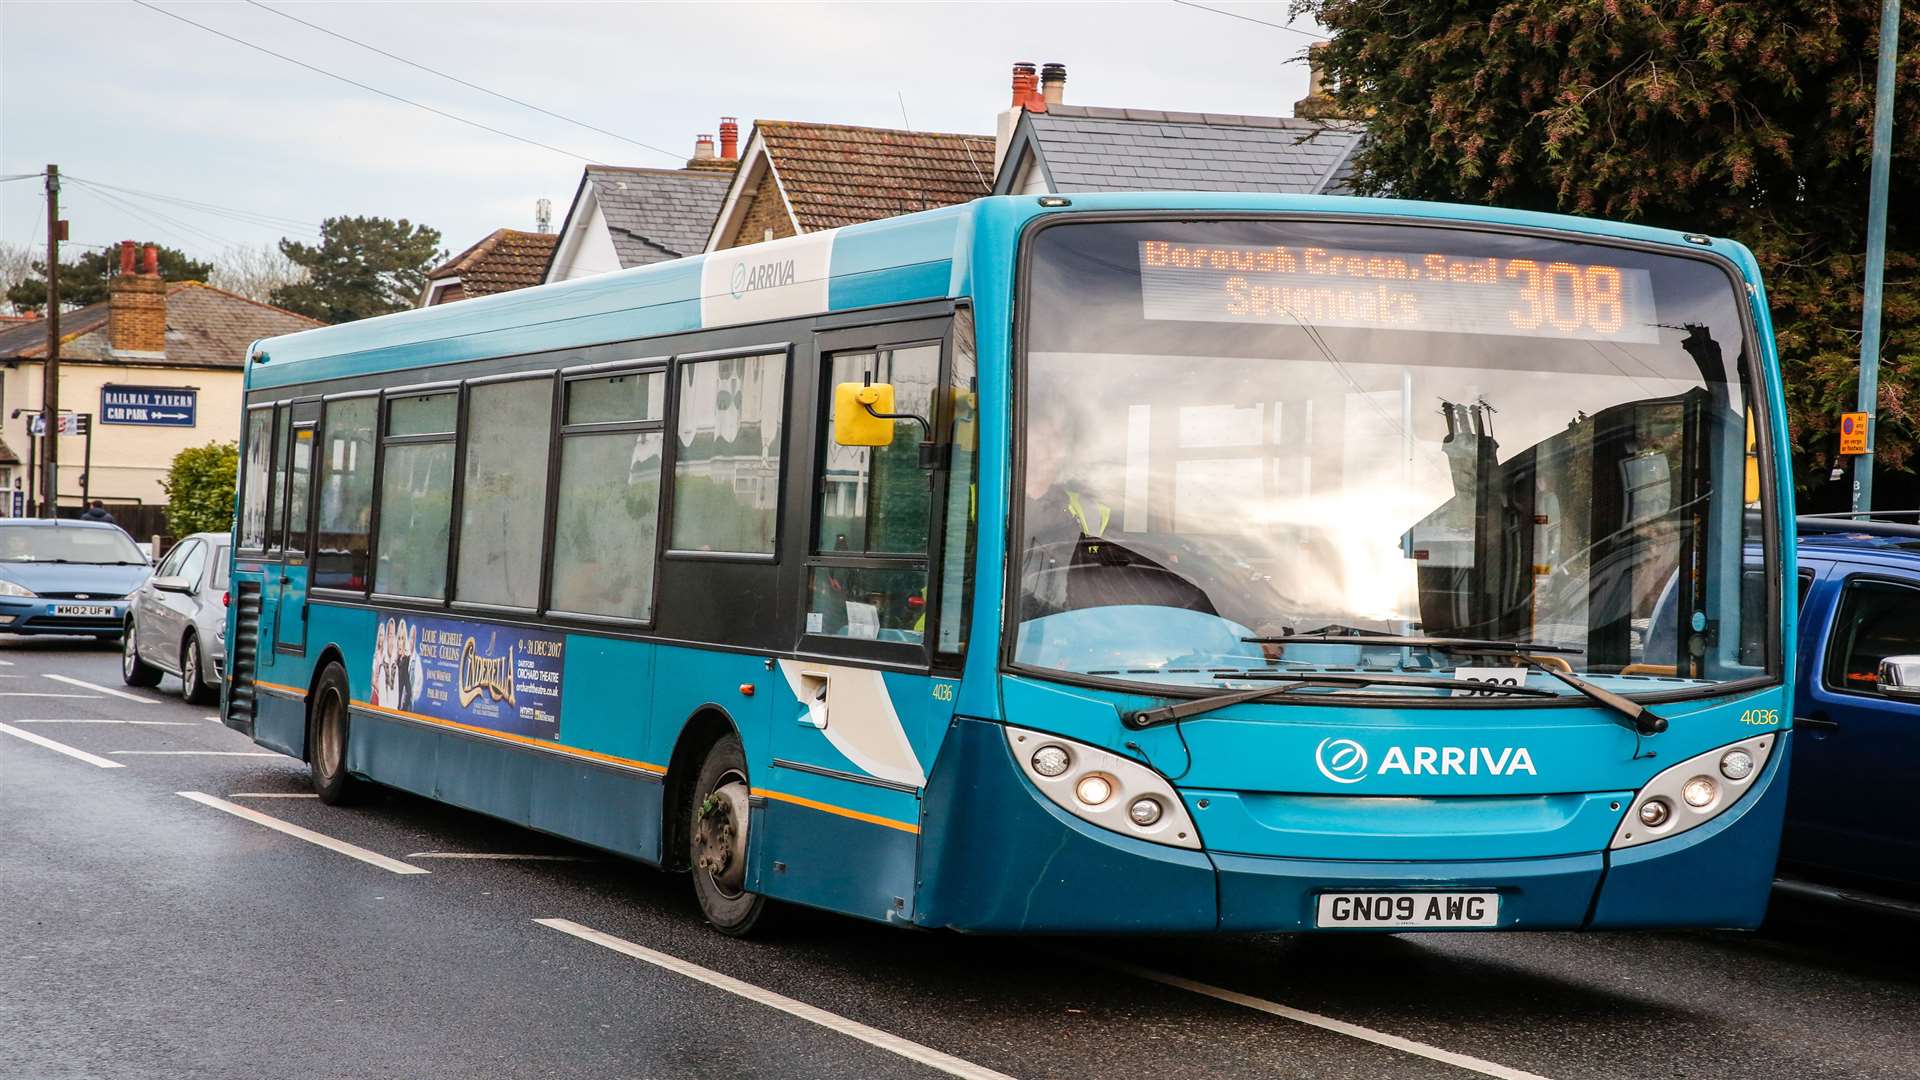 The 308 Arriva bus. Picture: Matthew Walker